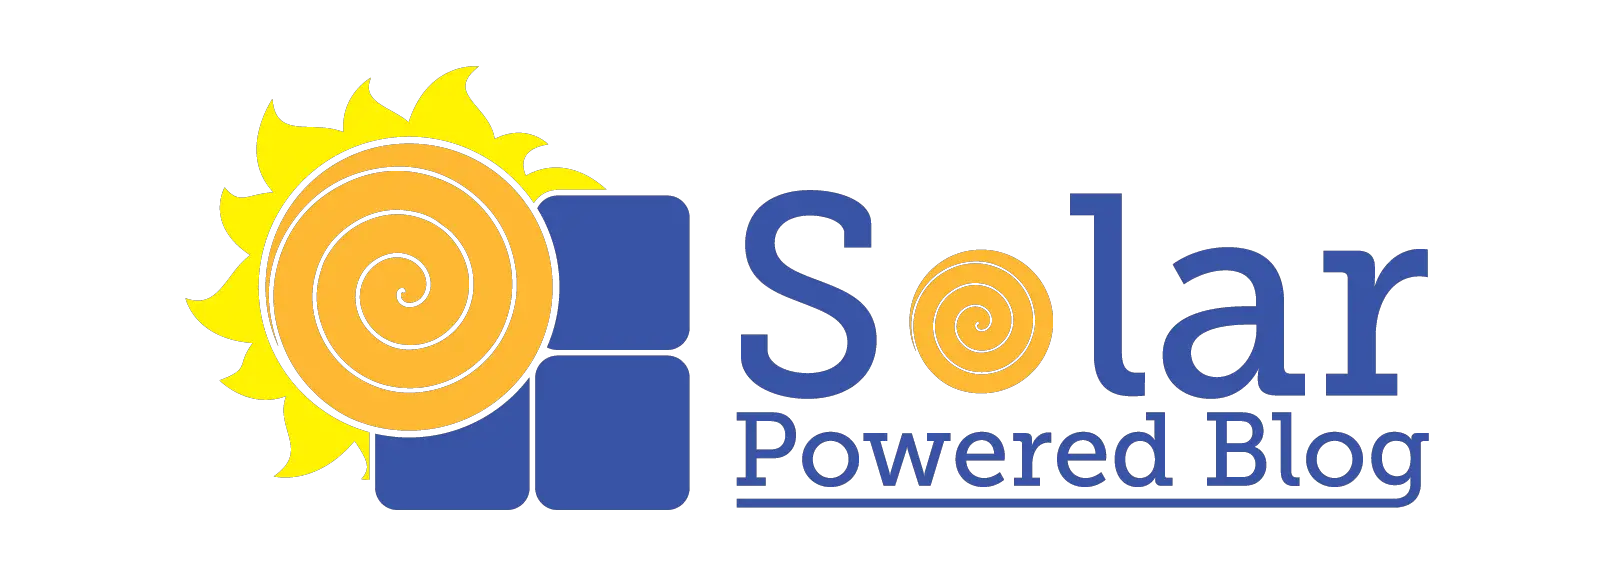 Solar Powered Blog